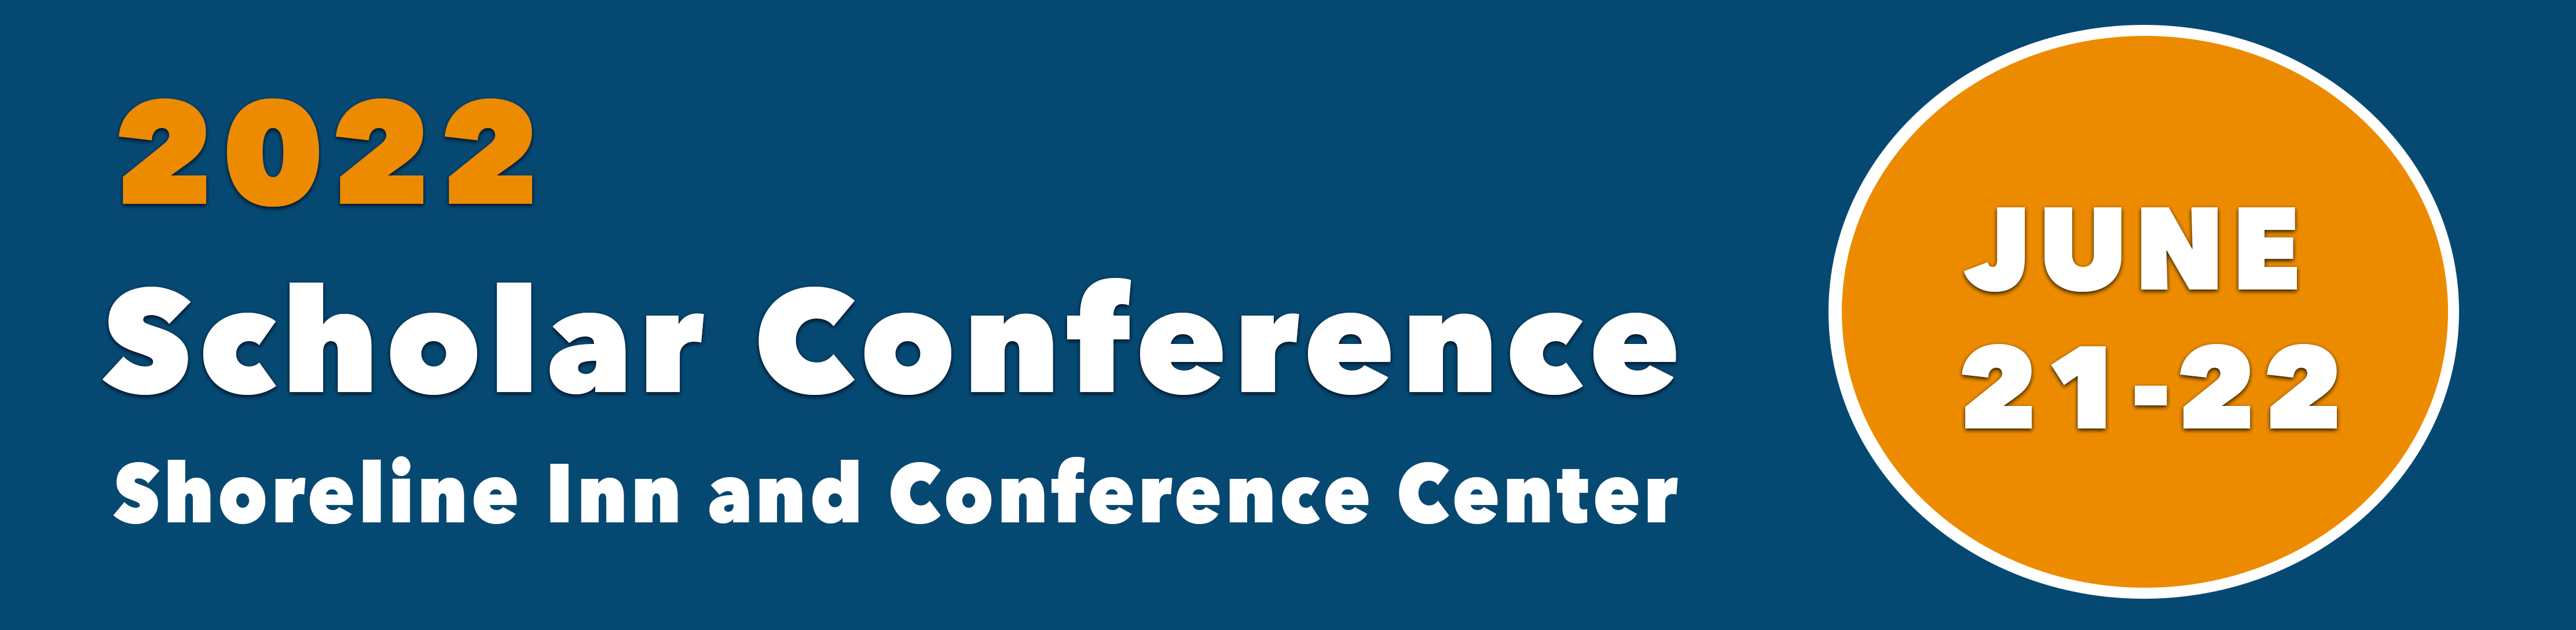 2022 Scholar Conference Web Banner